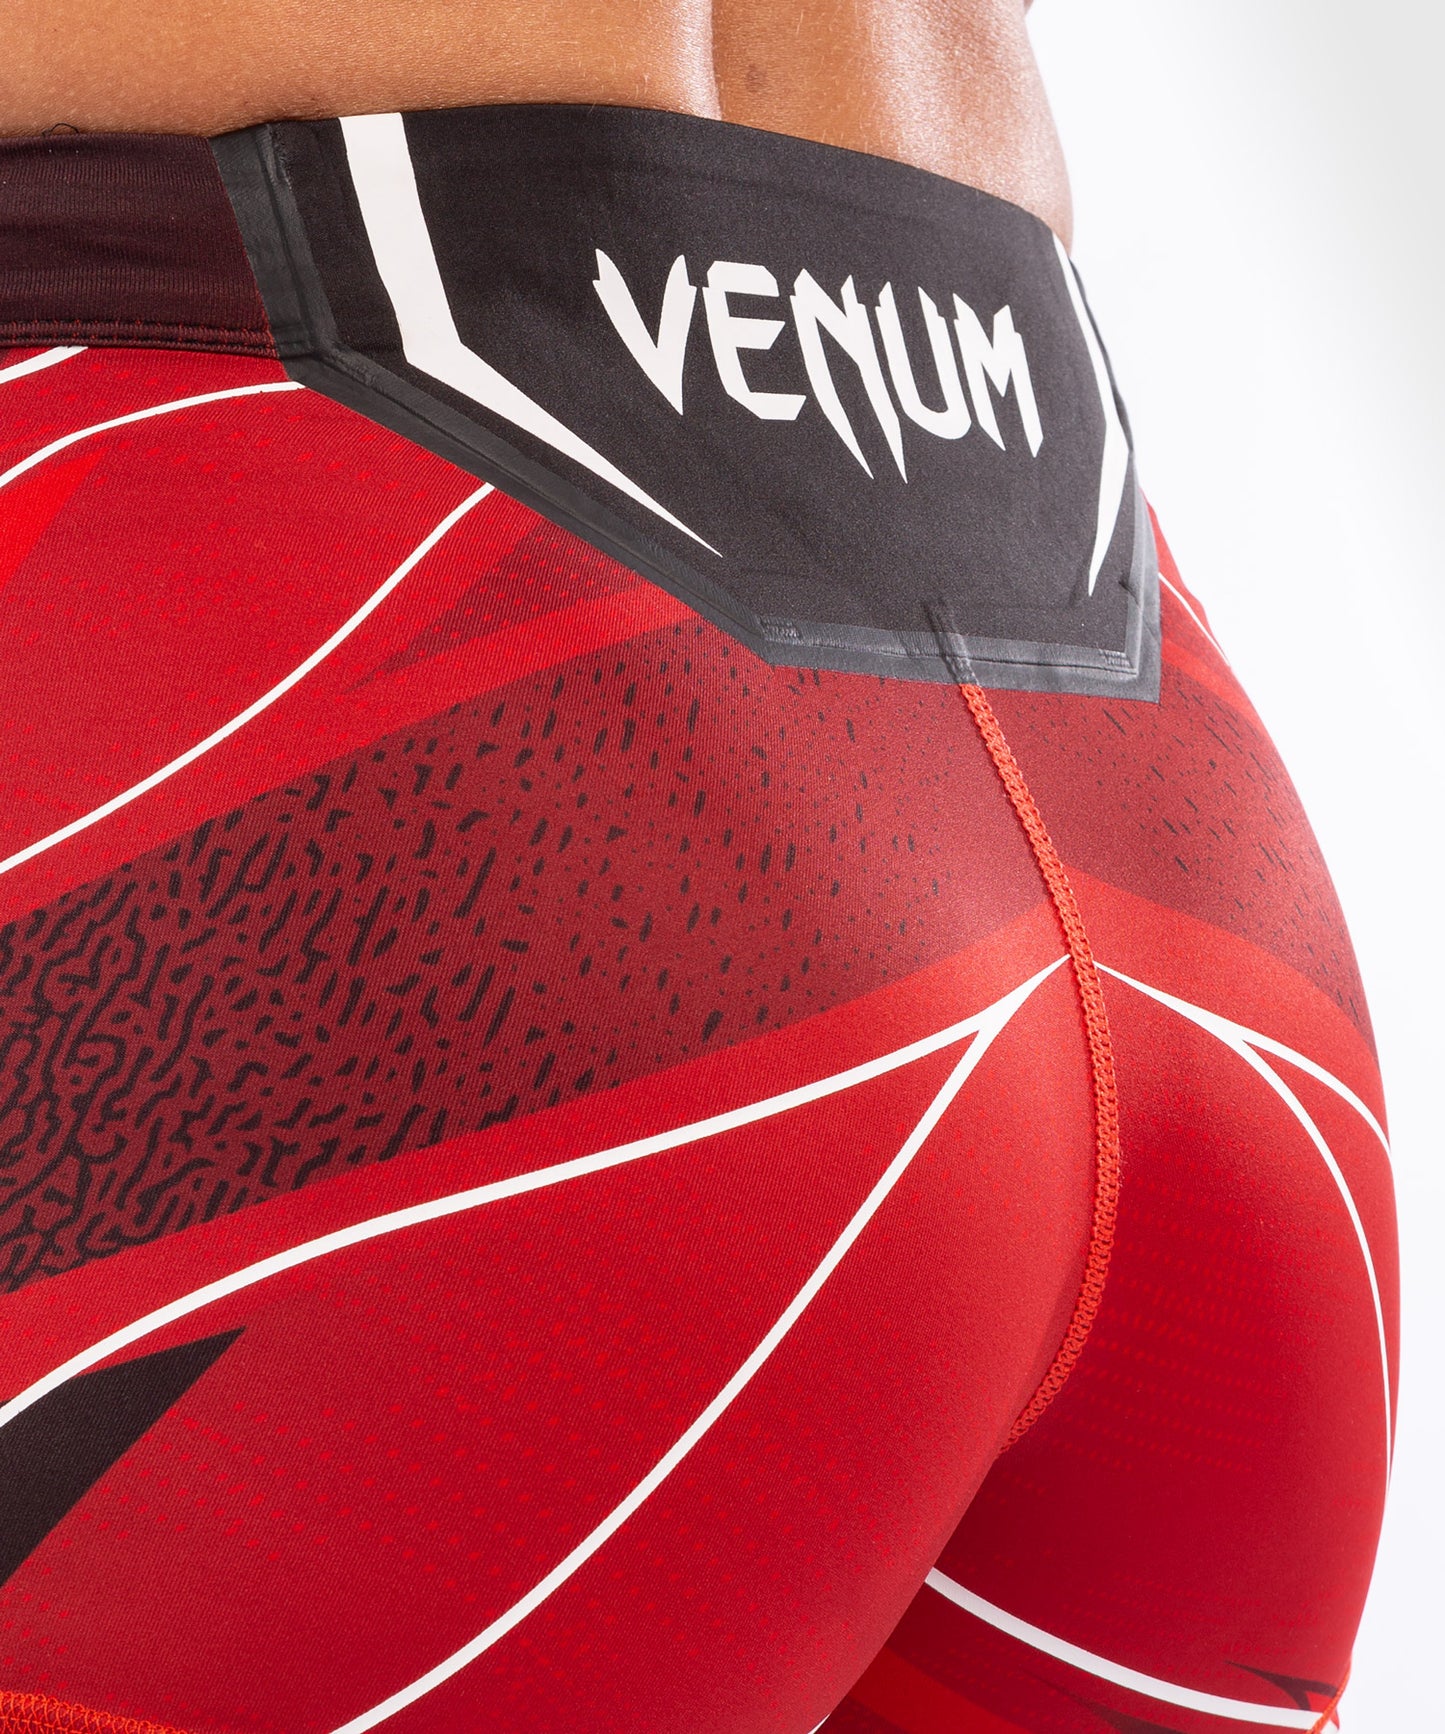 UFC Venum Authentic Fight Night Women's Vale Tudo Shorts - Short Fit - Red